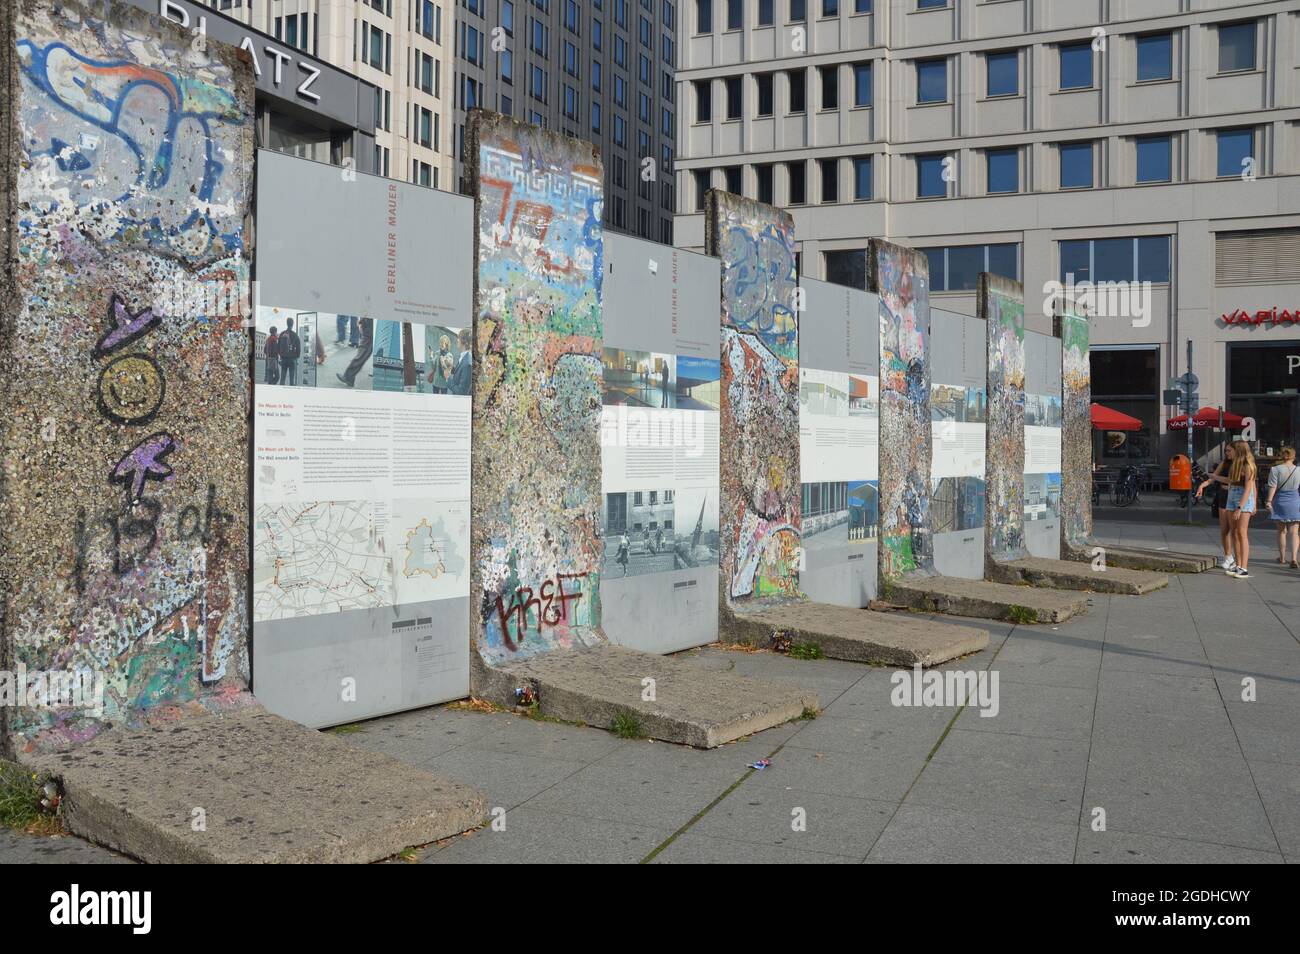 60th anniversary of Berlin Wall construction - Potsdamer Platz, Berlin, Germany - August 13, 2021. Stock Photo